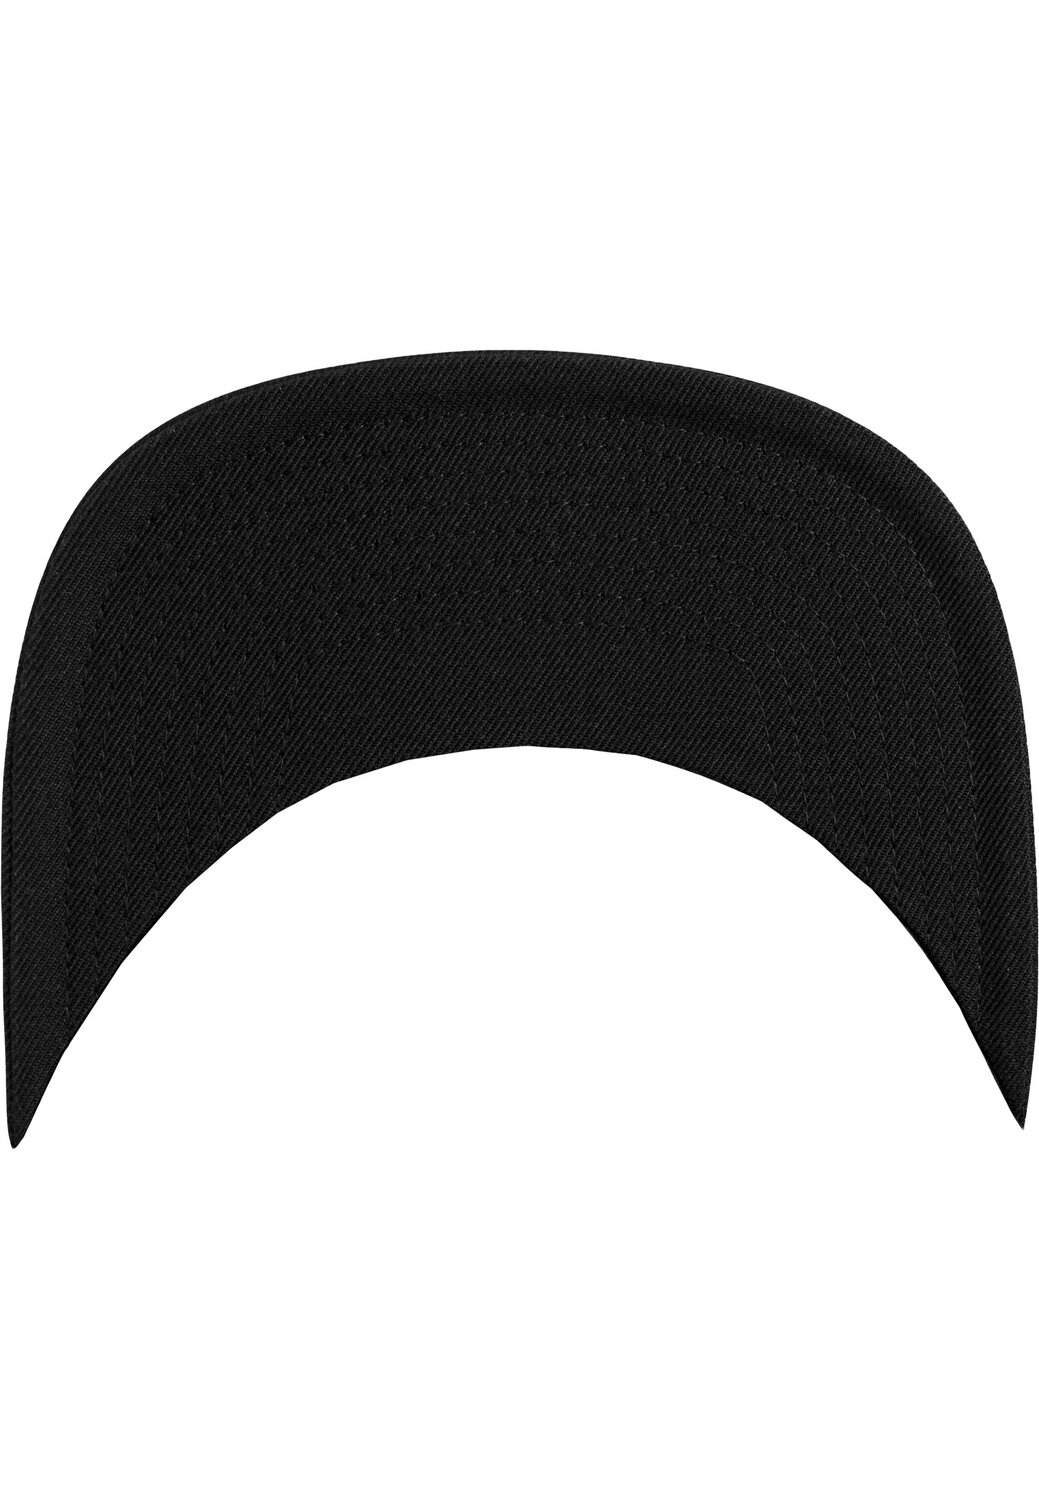 Snapback black/grey | Cap Flexfit Crown Stripes Melange MAXISCOOT